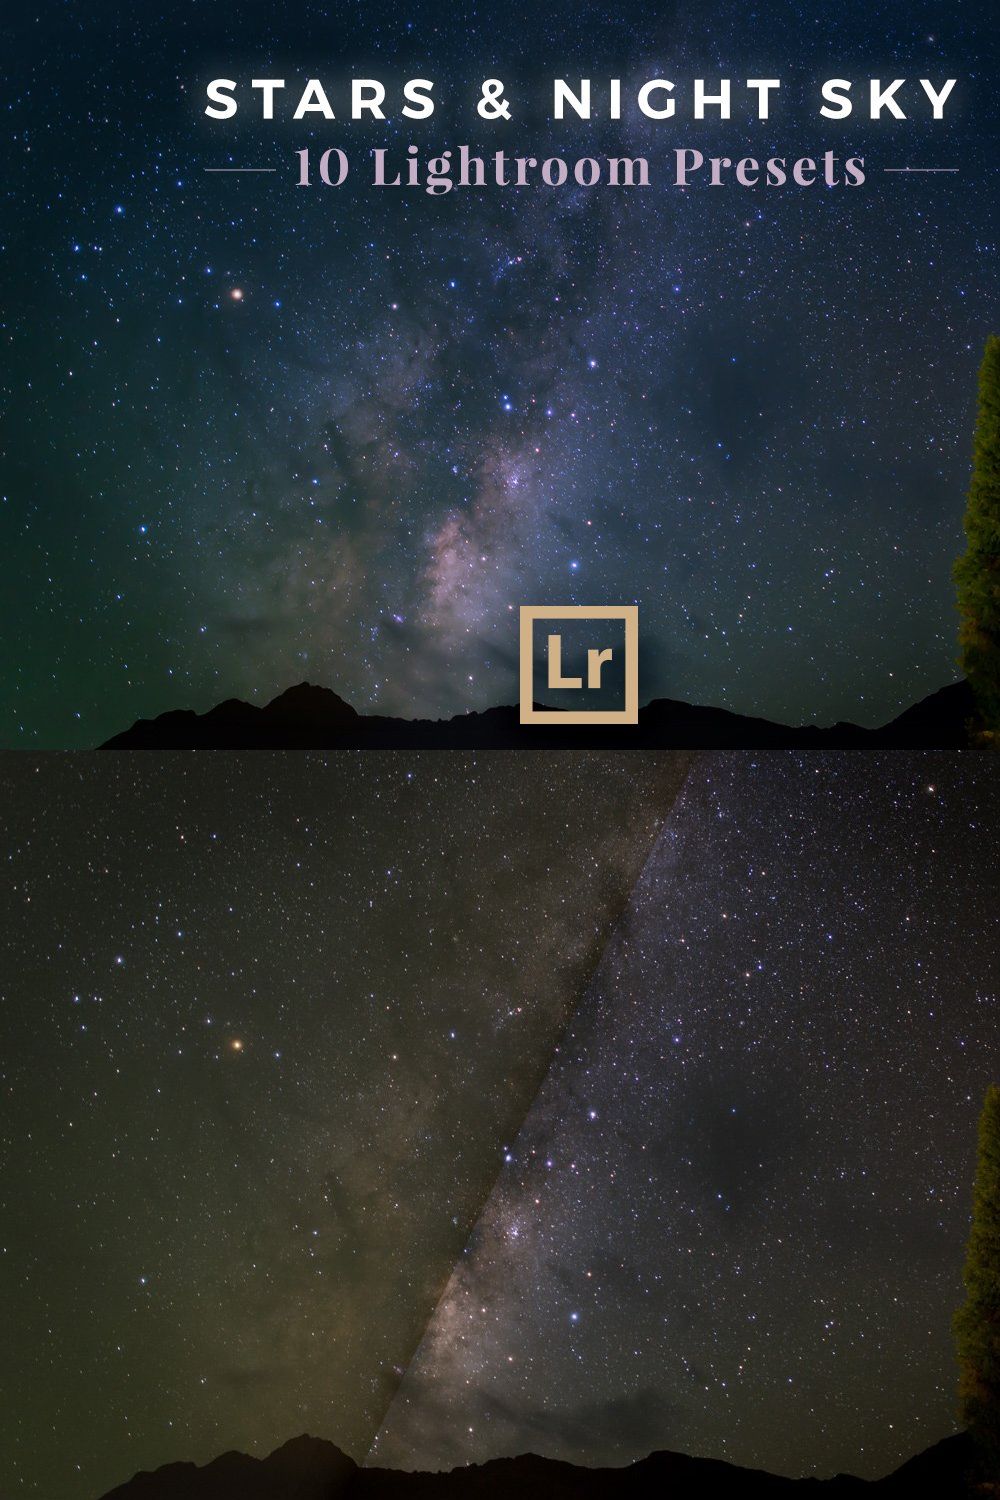 Stars & Night Sky Lightroom Presets pinterest preview image.